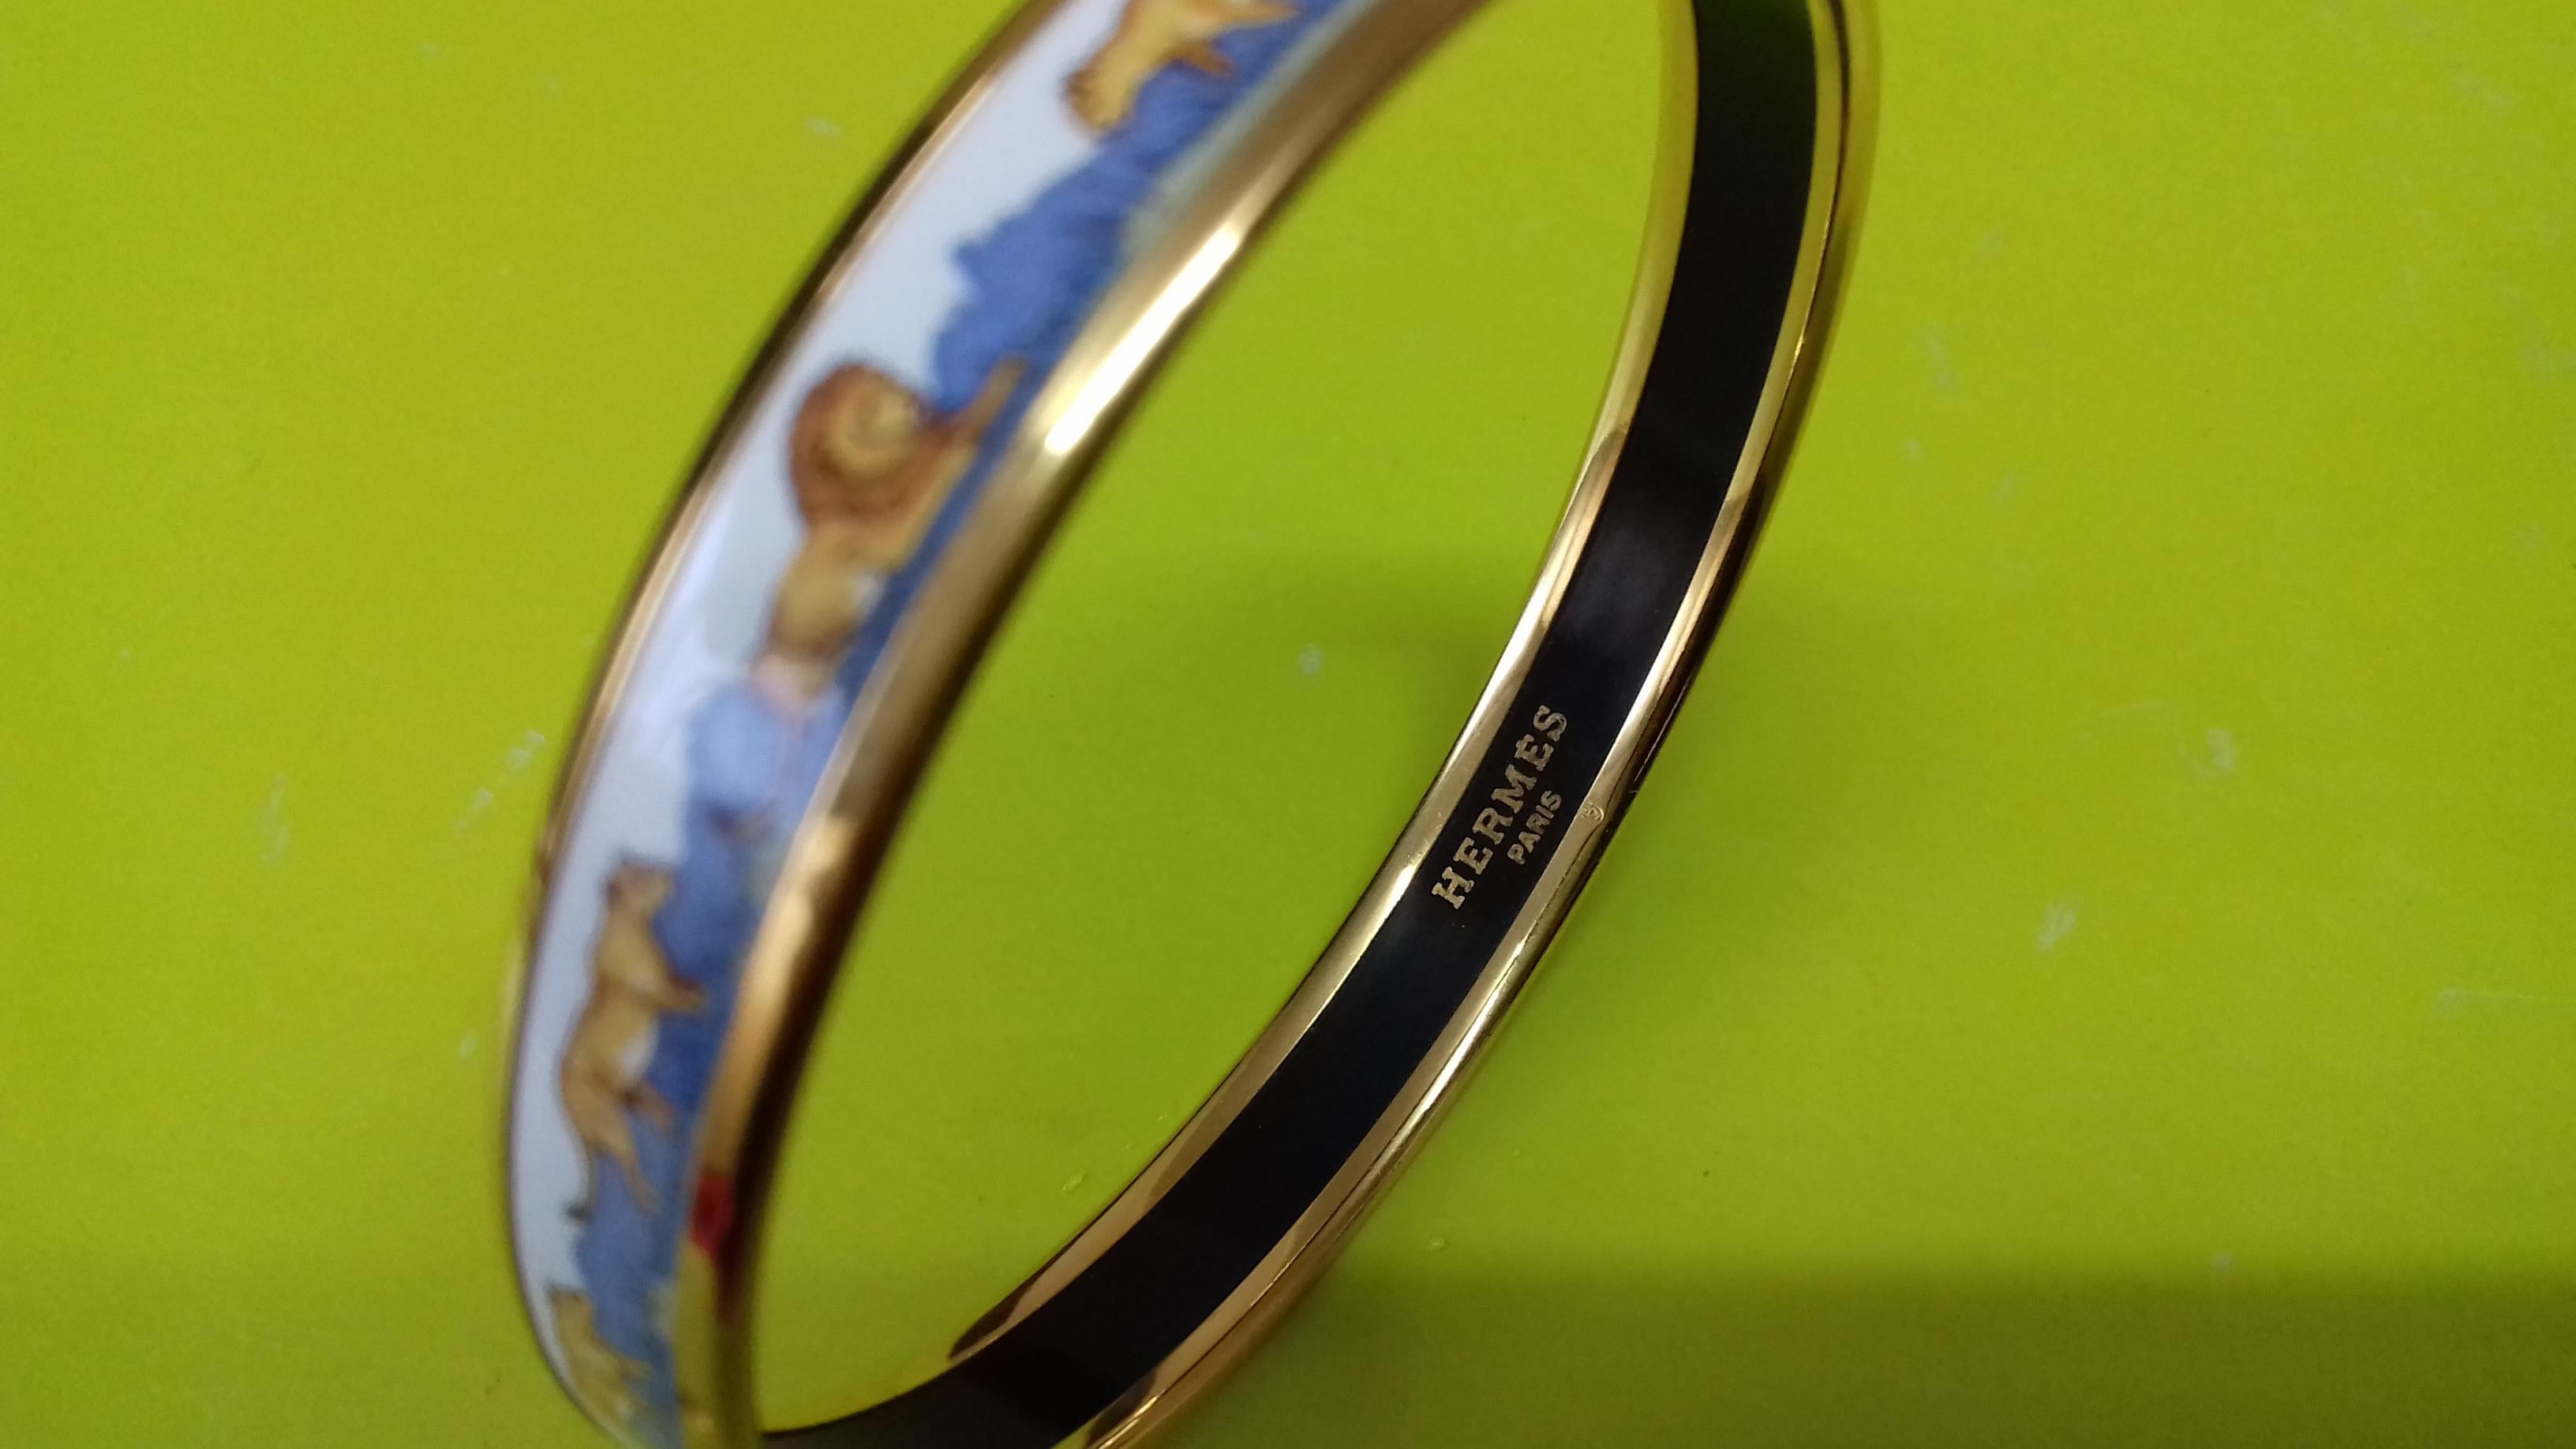 Hermès Printed Enamel Bracelet Lions and Lionesses Narrow Gold Hdw Size PM 65 2